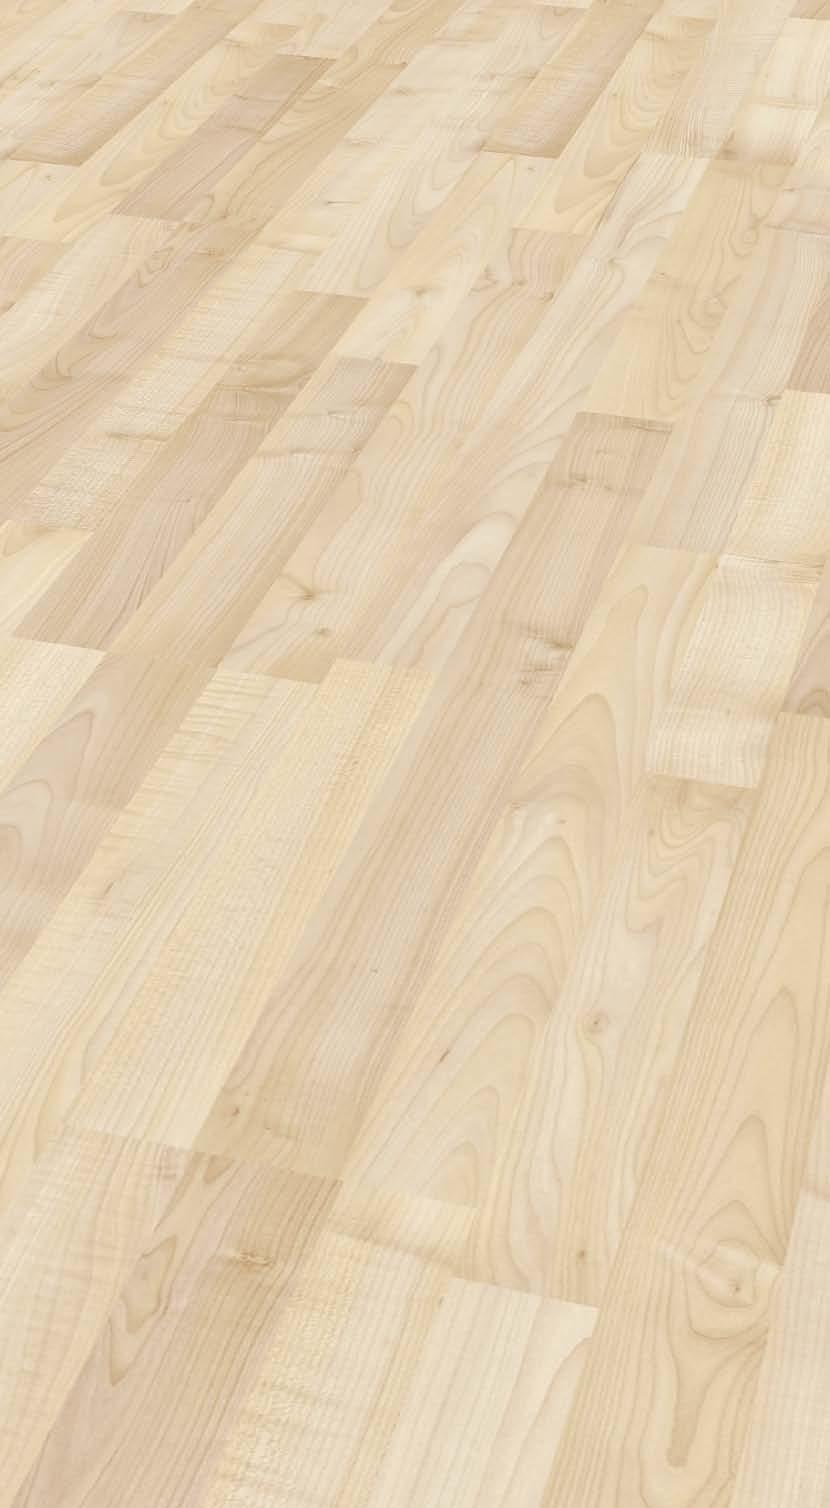 Maple studio 3-Strip wood pore